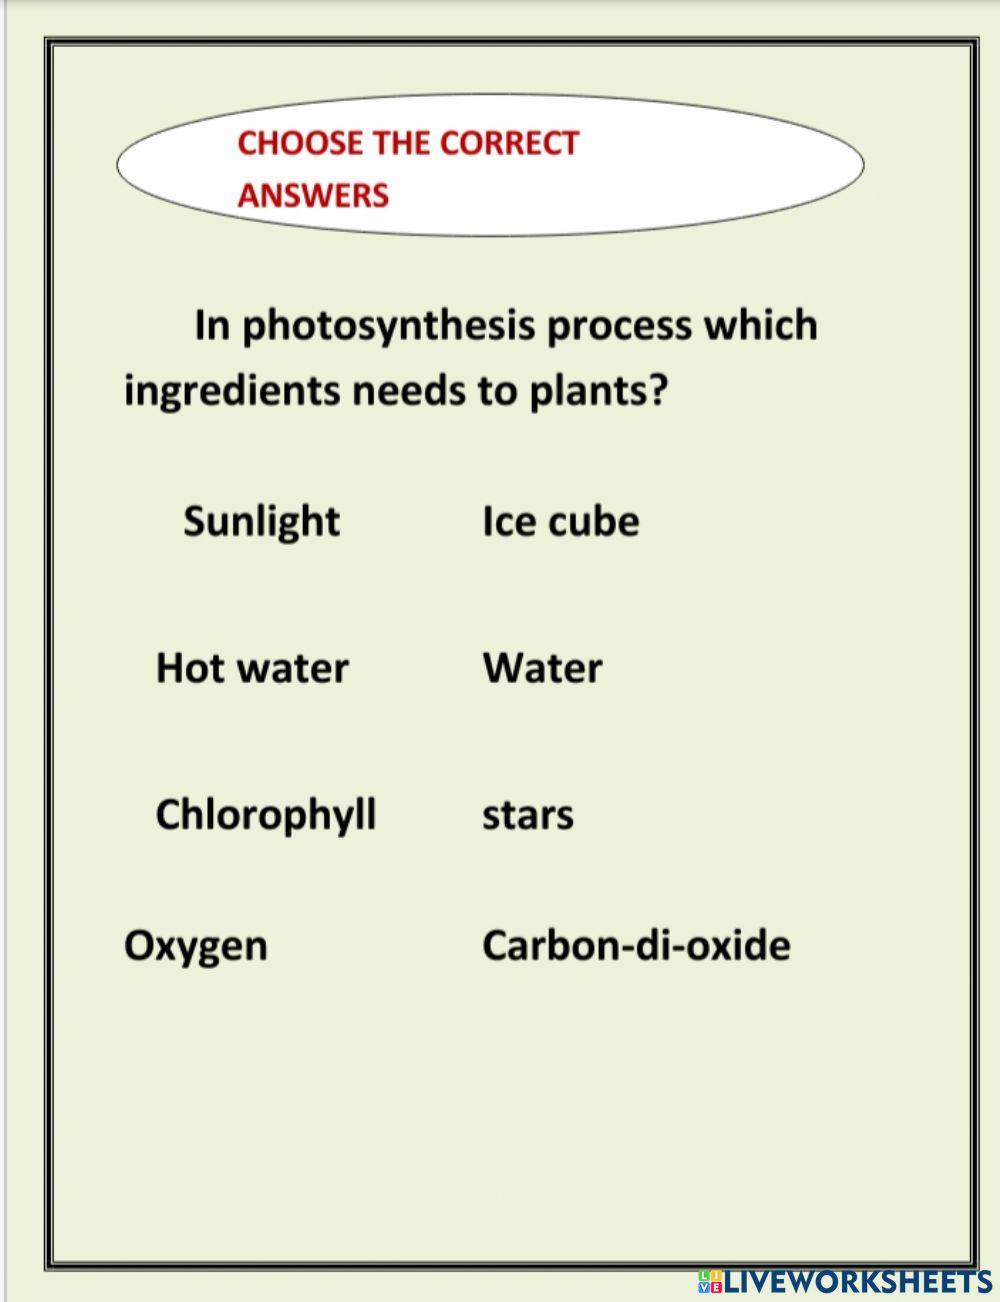 Photosynthesis2